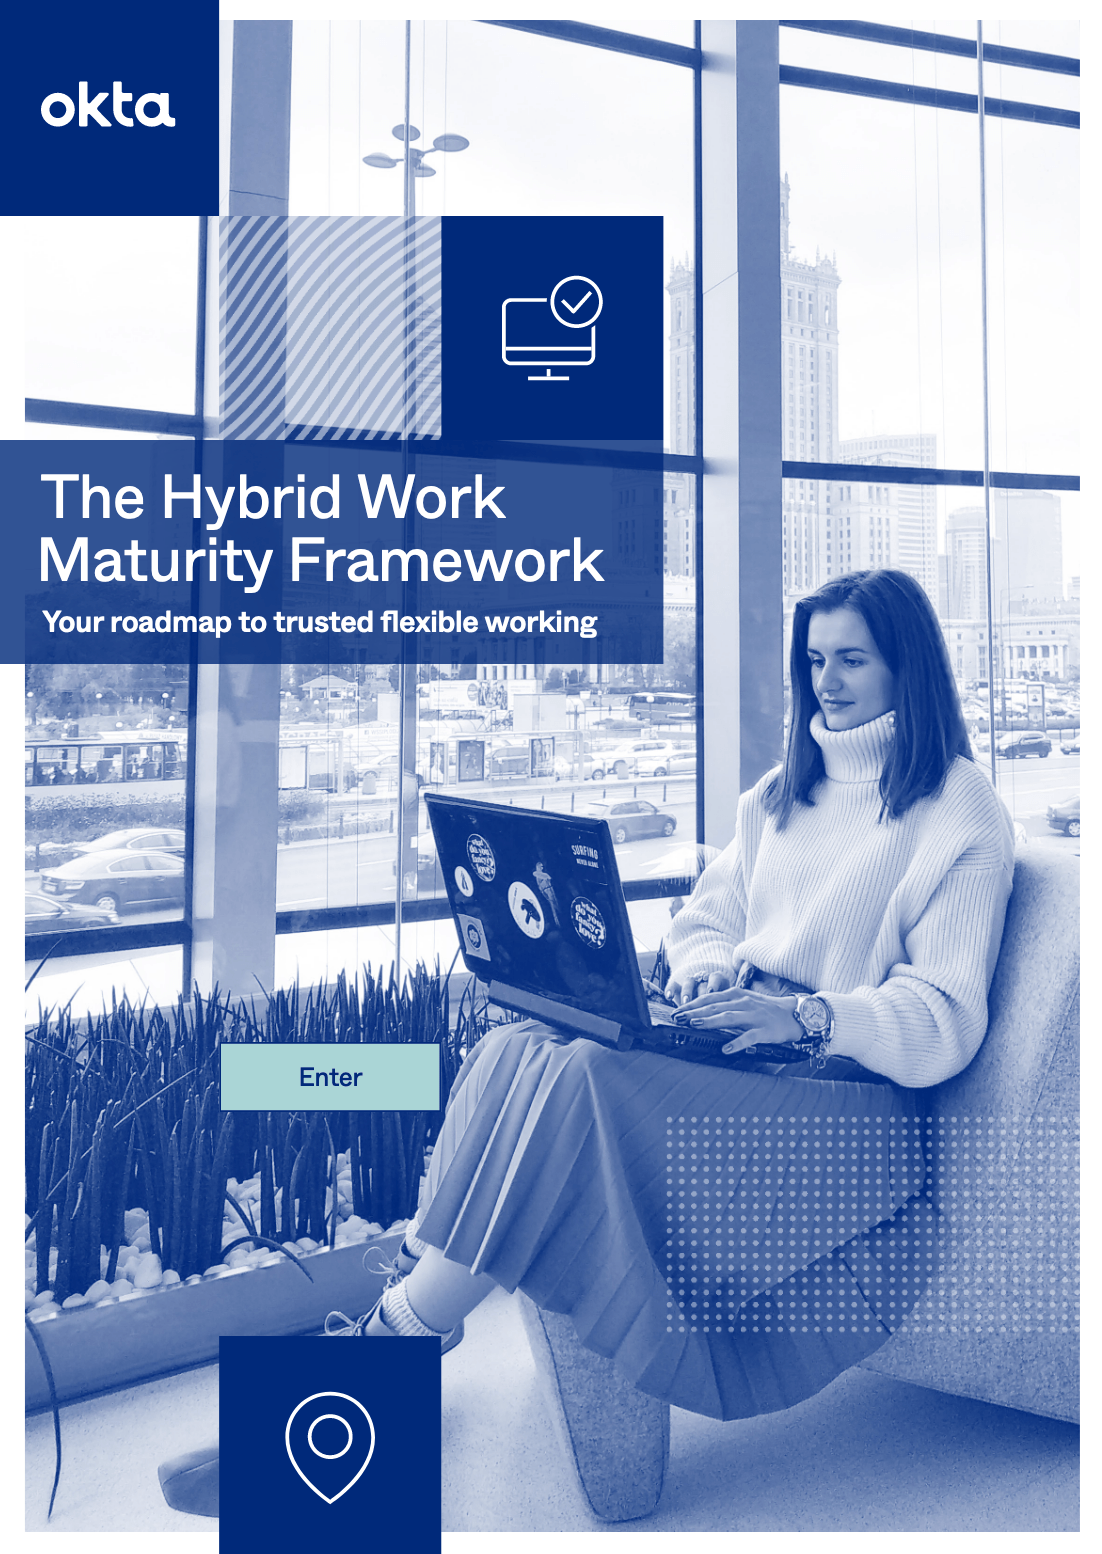 The Hybrid Work Maturity Framework - The Hybrid Work Maturity Framework